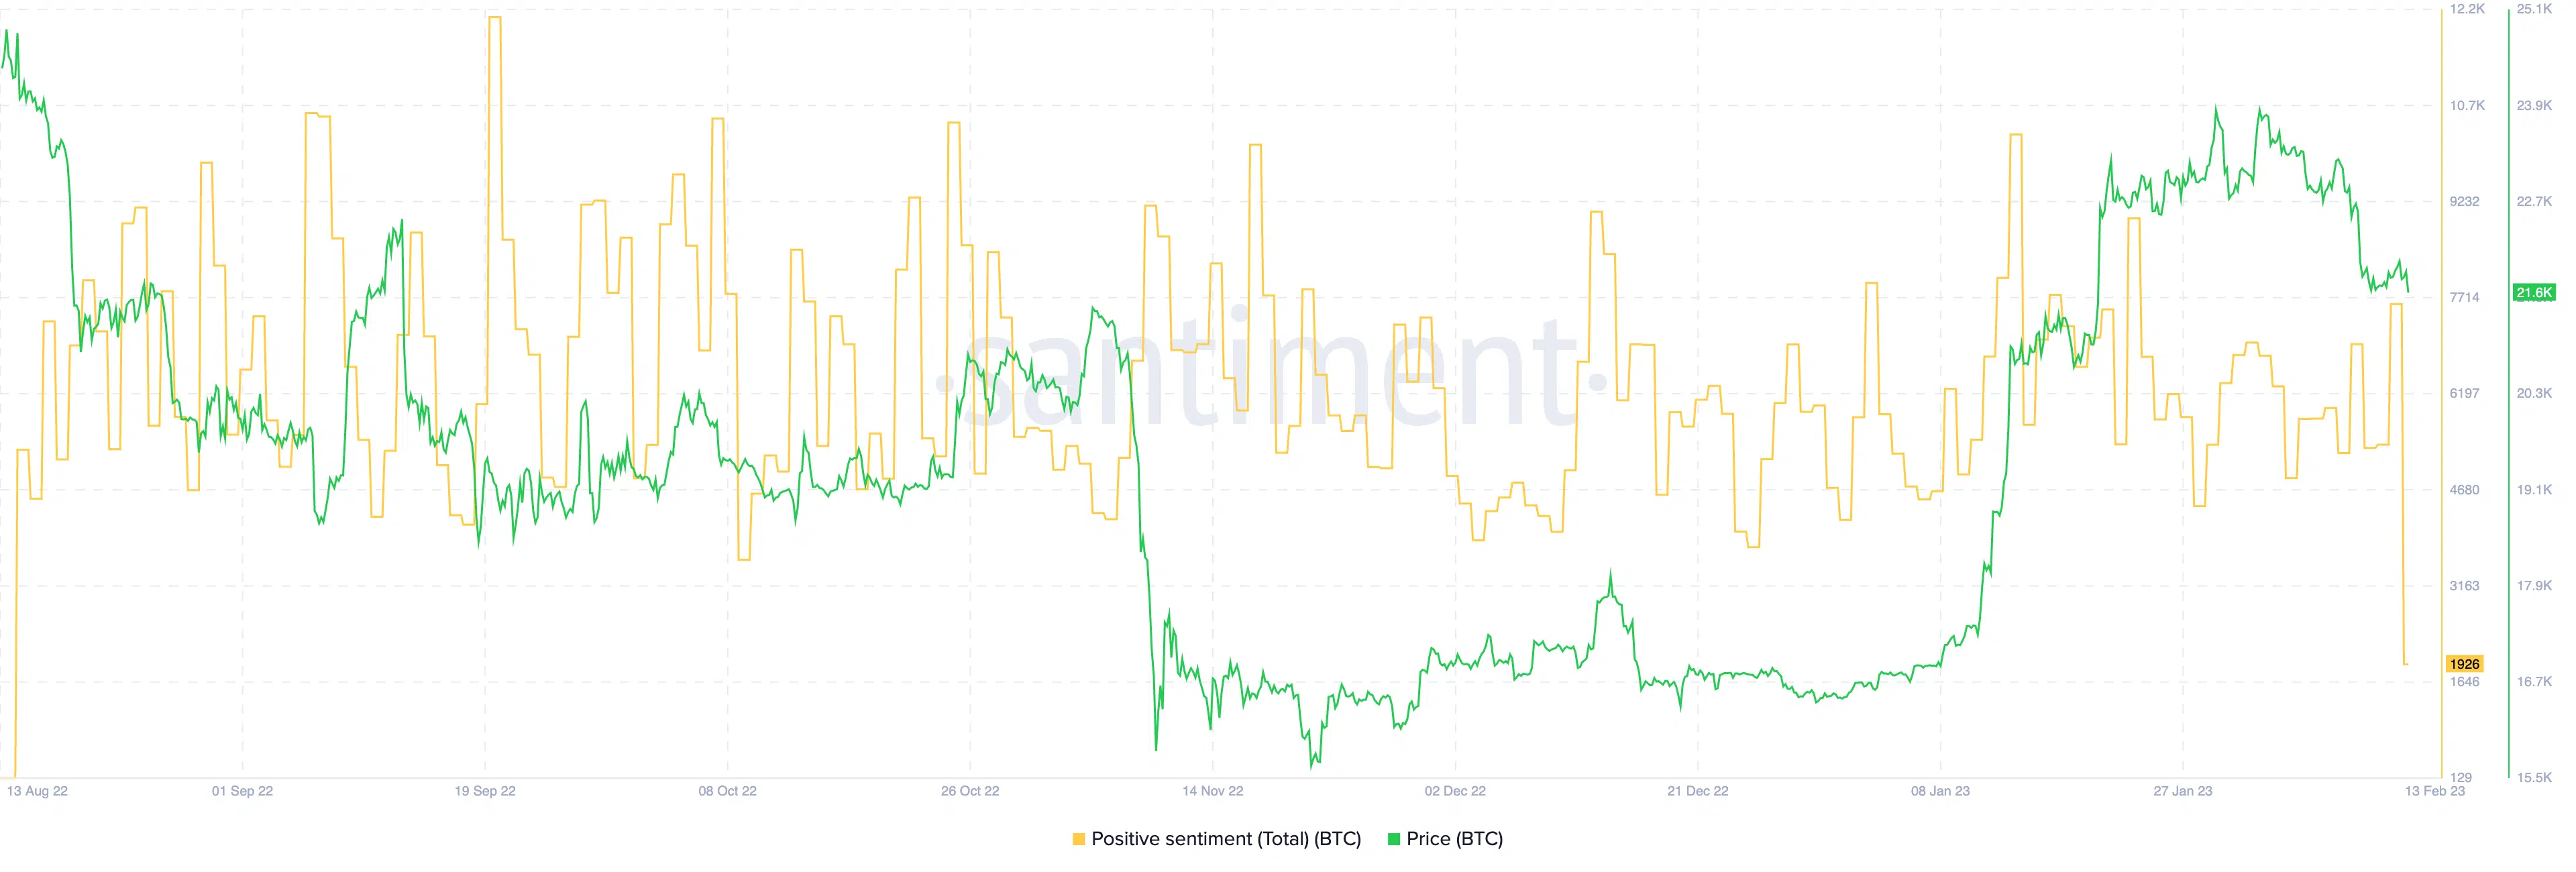 BTC price and Bitcoin positive sentiment